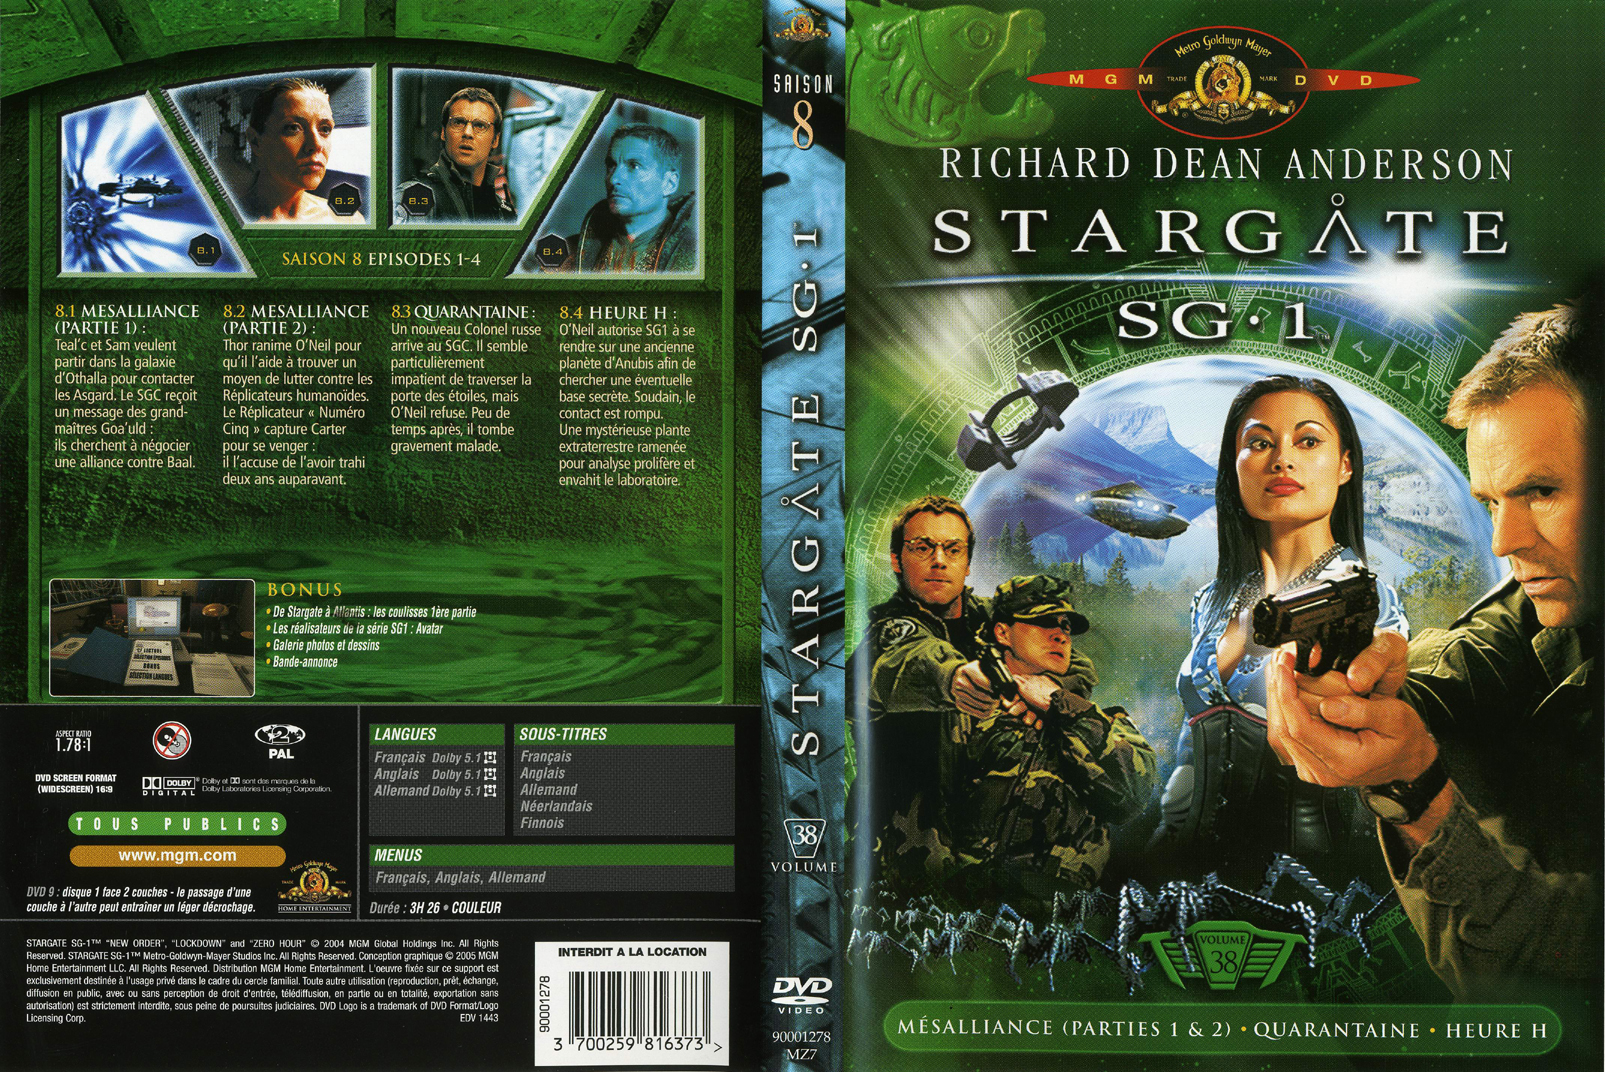 Jaquette DVD Stargate SG1 vol 38